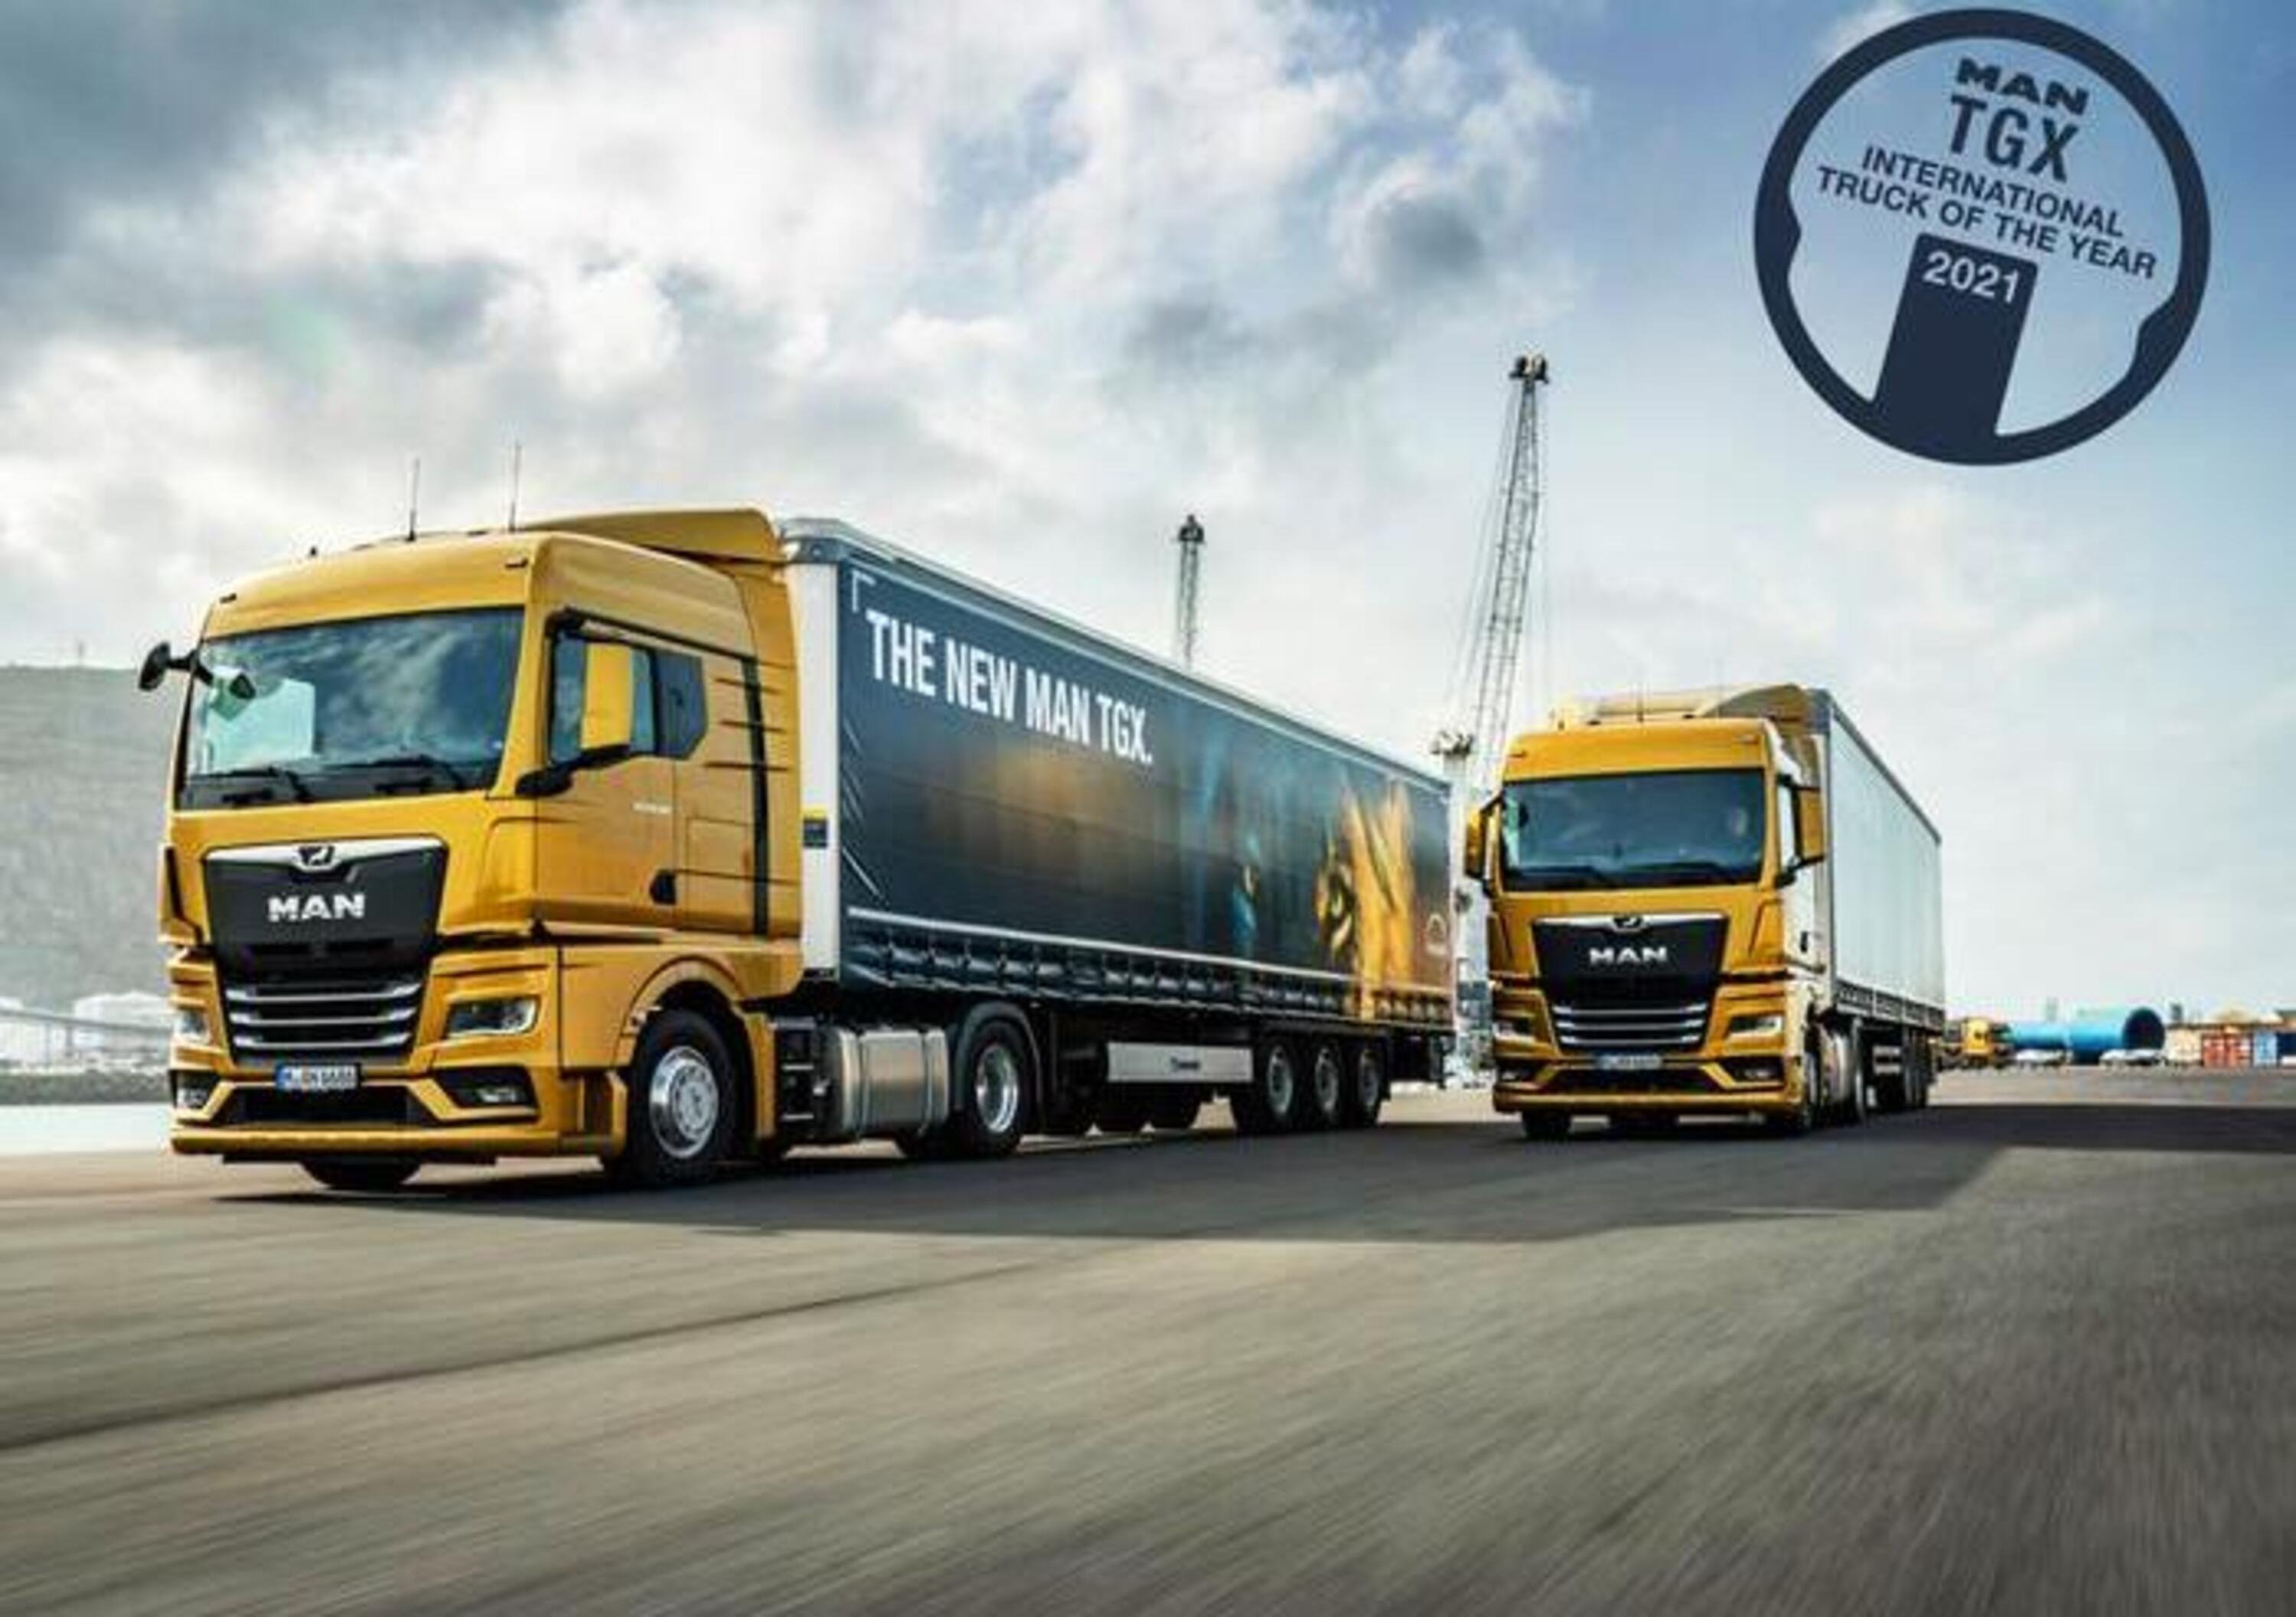 MAN TGX nominato International Truck of the Year per il 2021